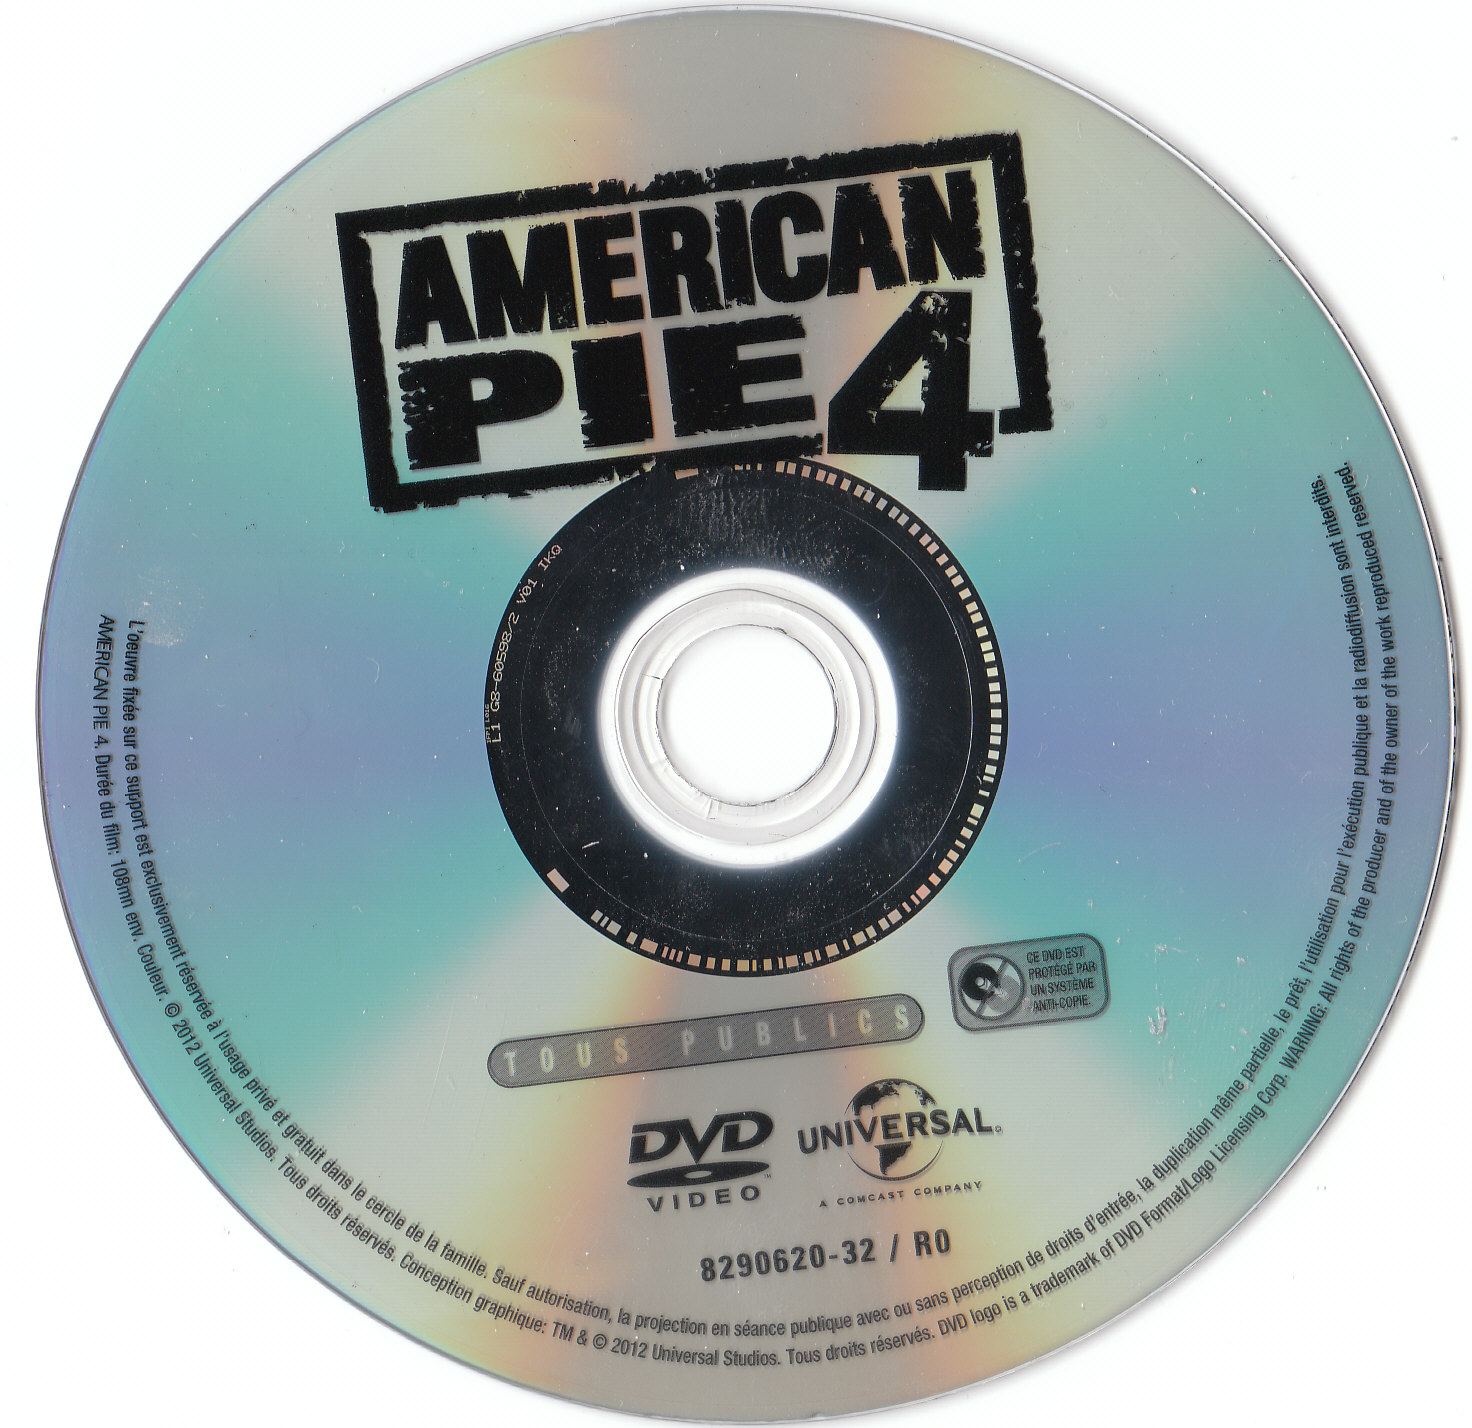 American pie 4